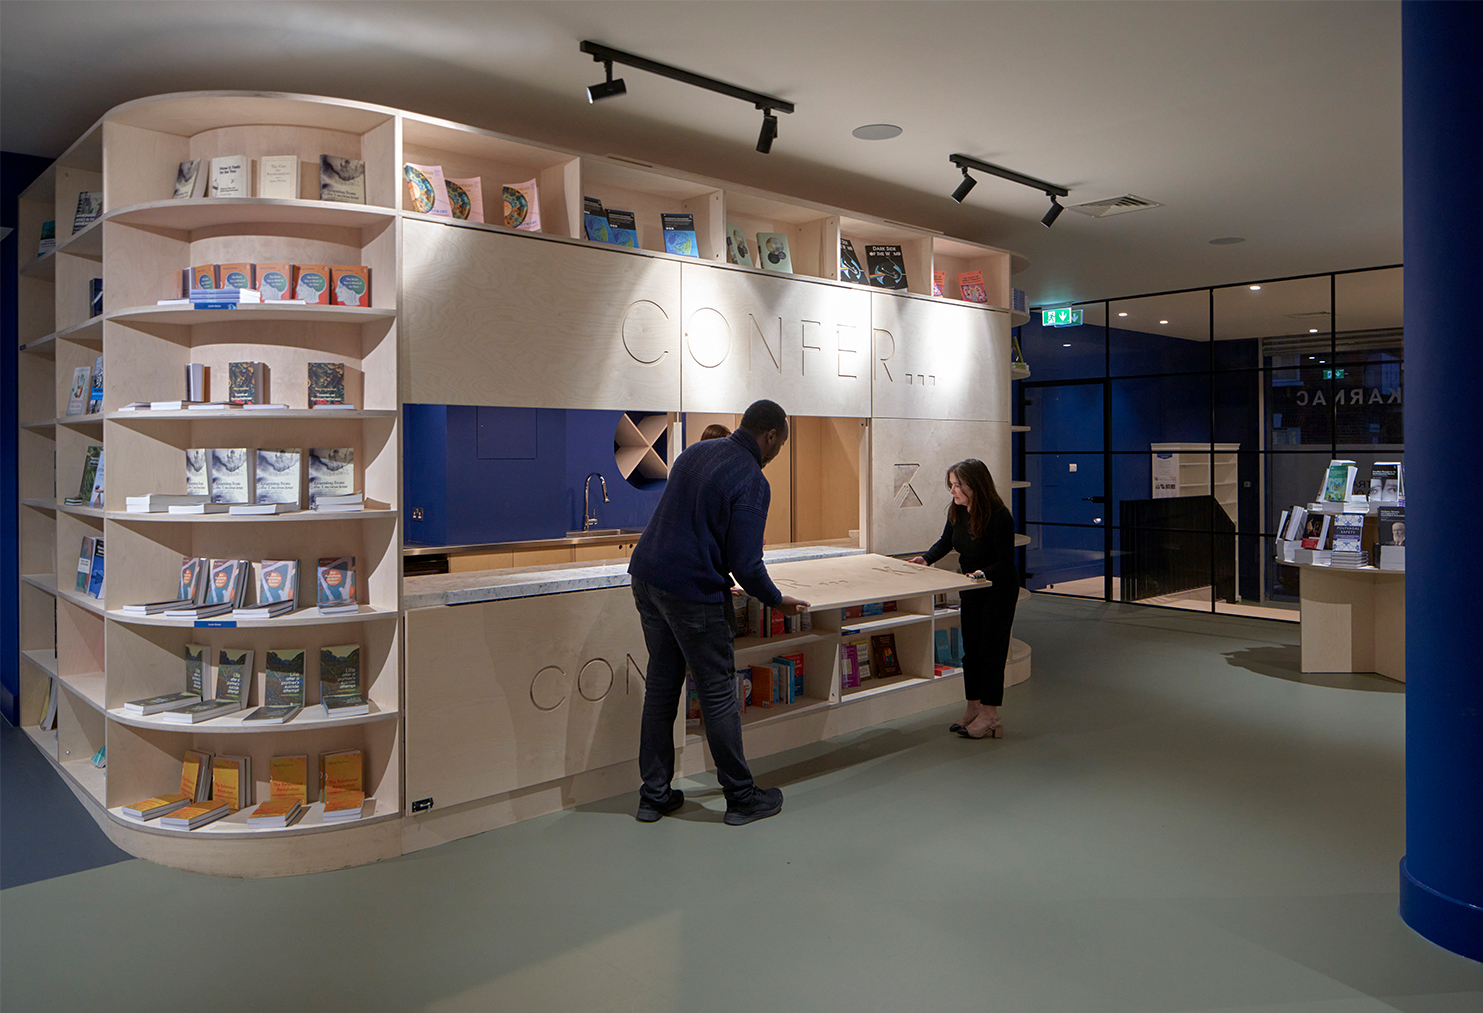 Confer & Karnac Bookshop - Chris Dyson Architects